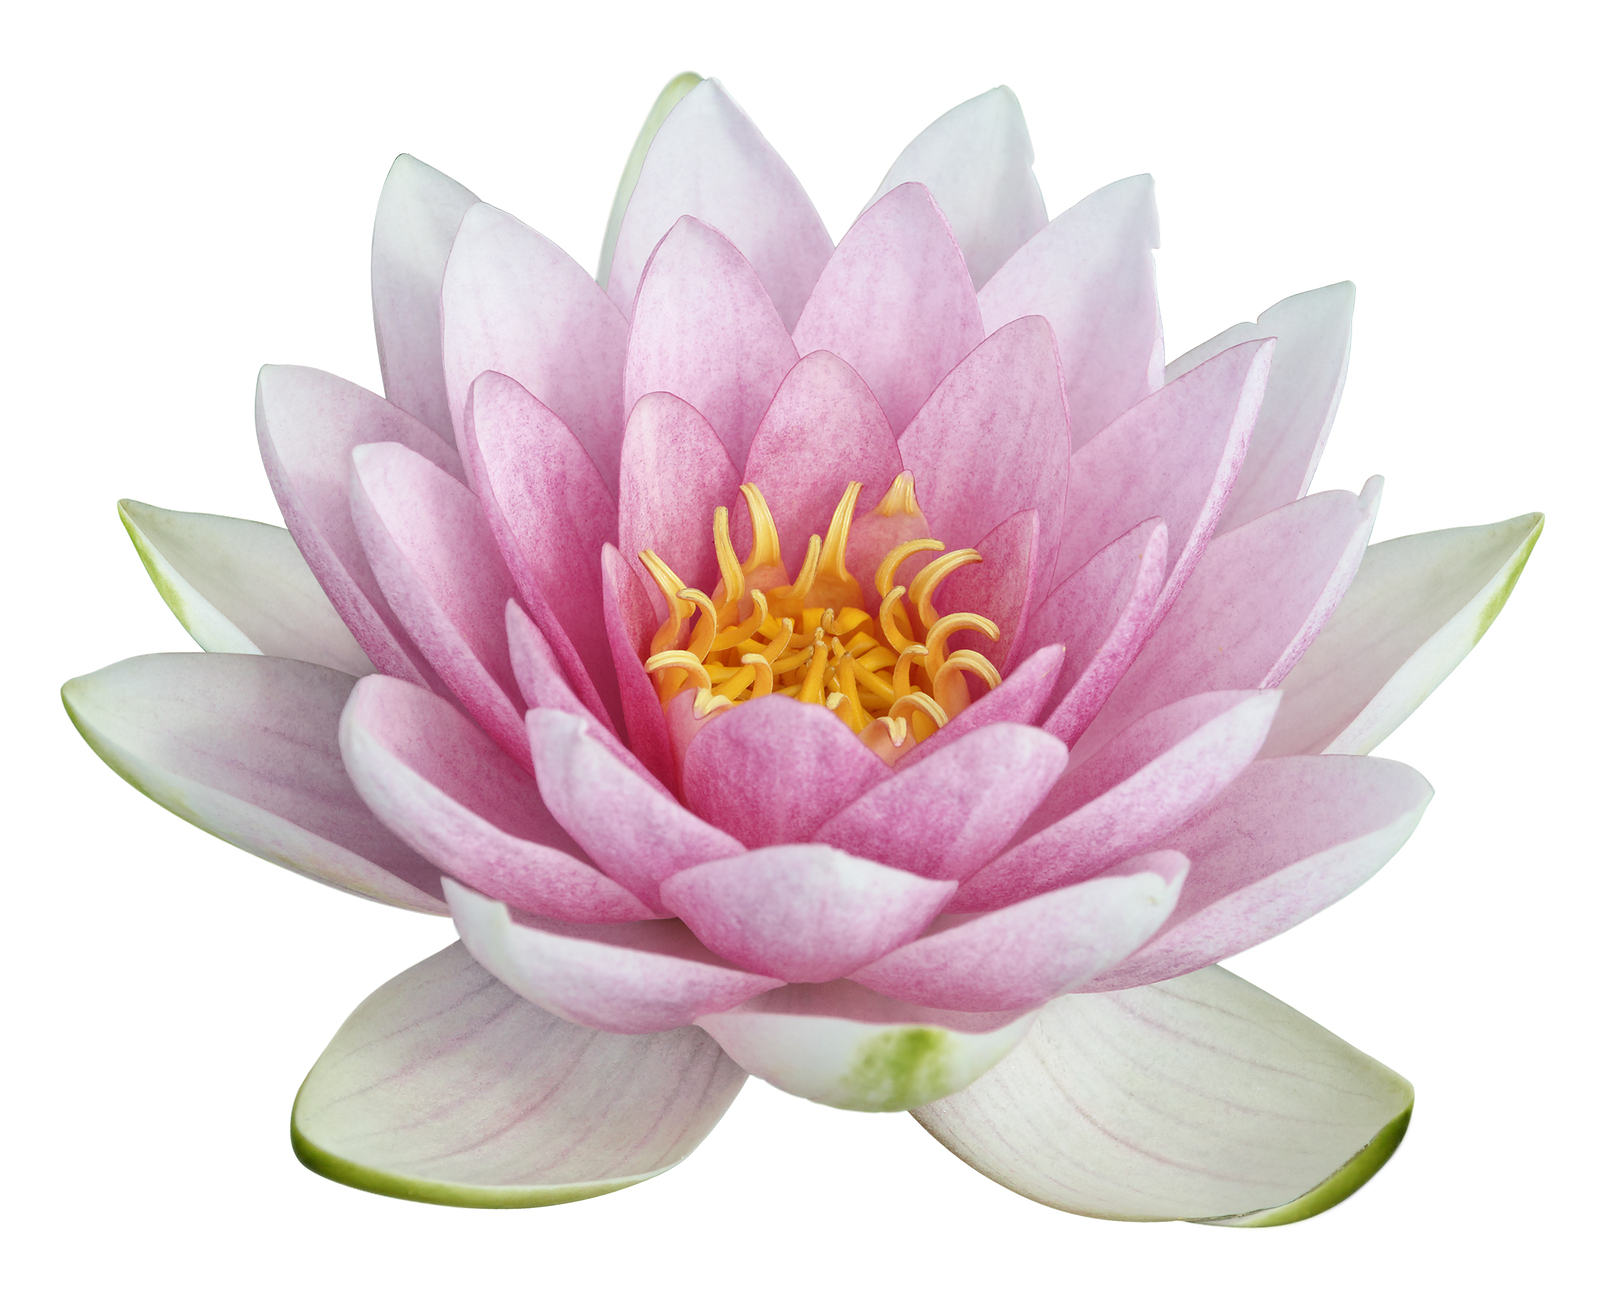 lotus flower images clipart - photo #49